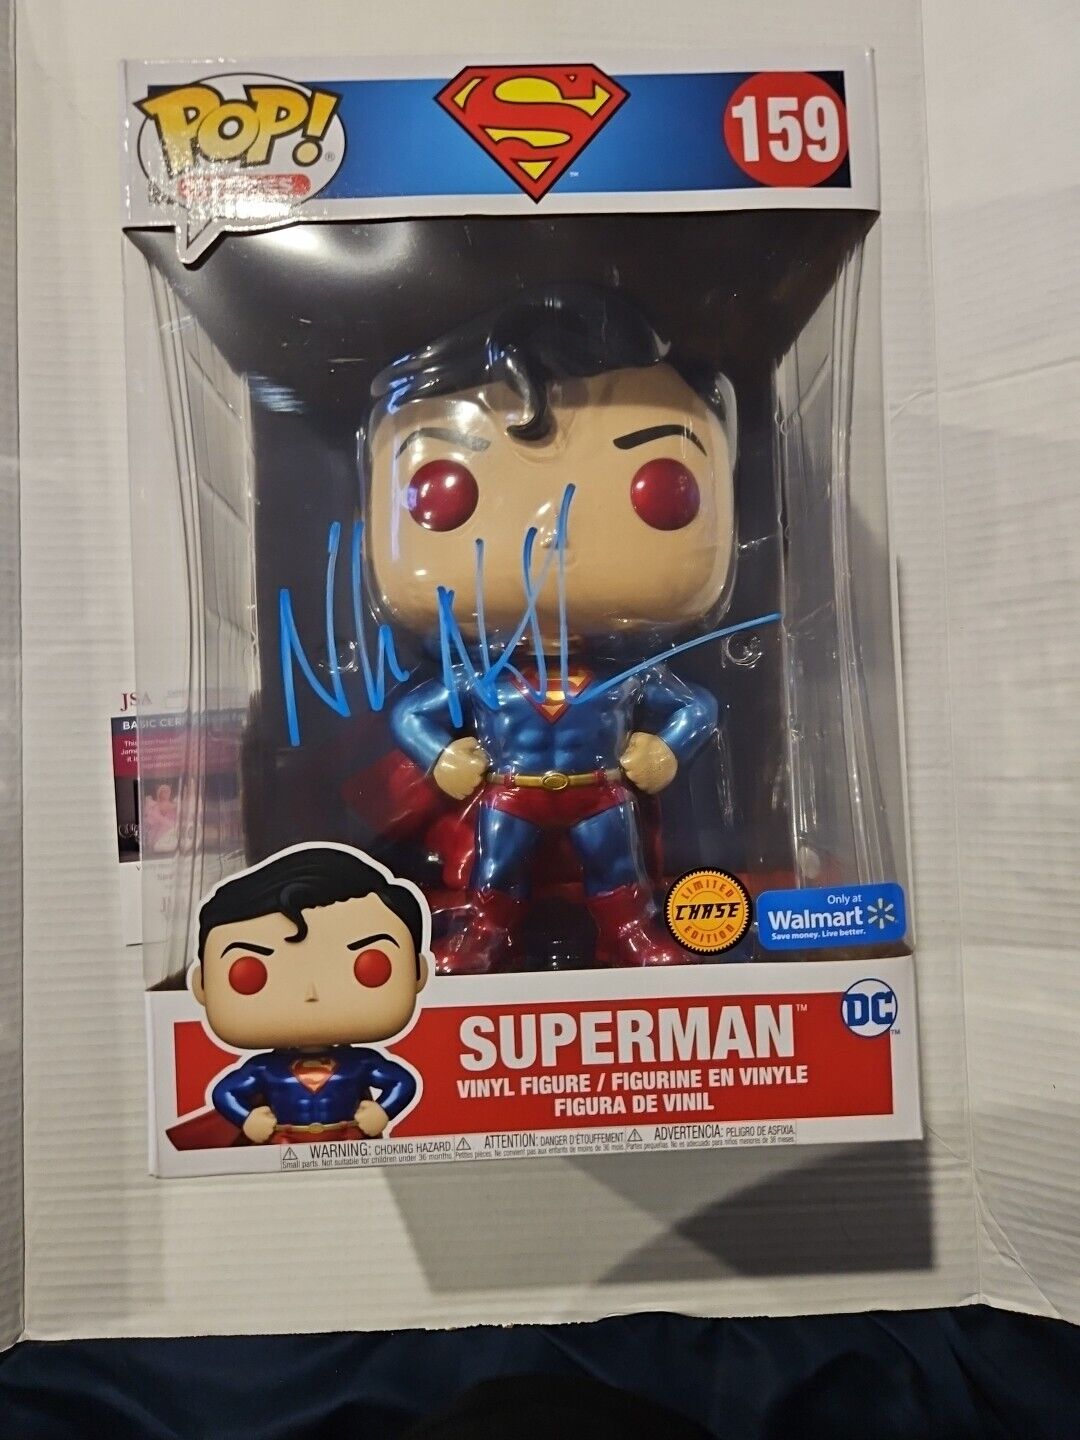 Nolan North Signed Funko Pop Superman #159 Chase Walmart Exclusive 10 Inch